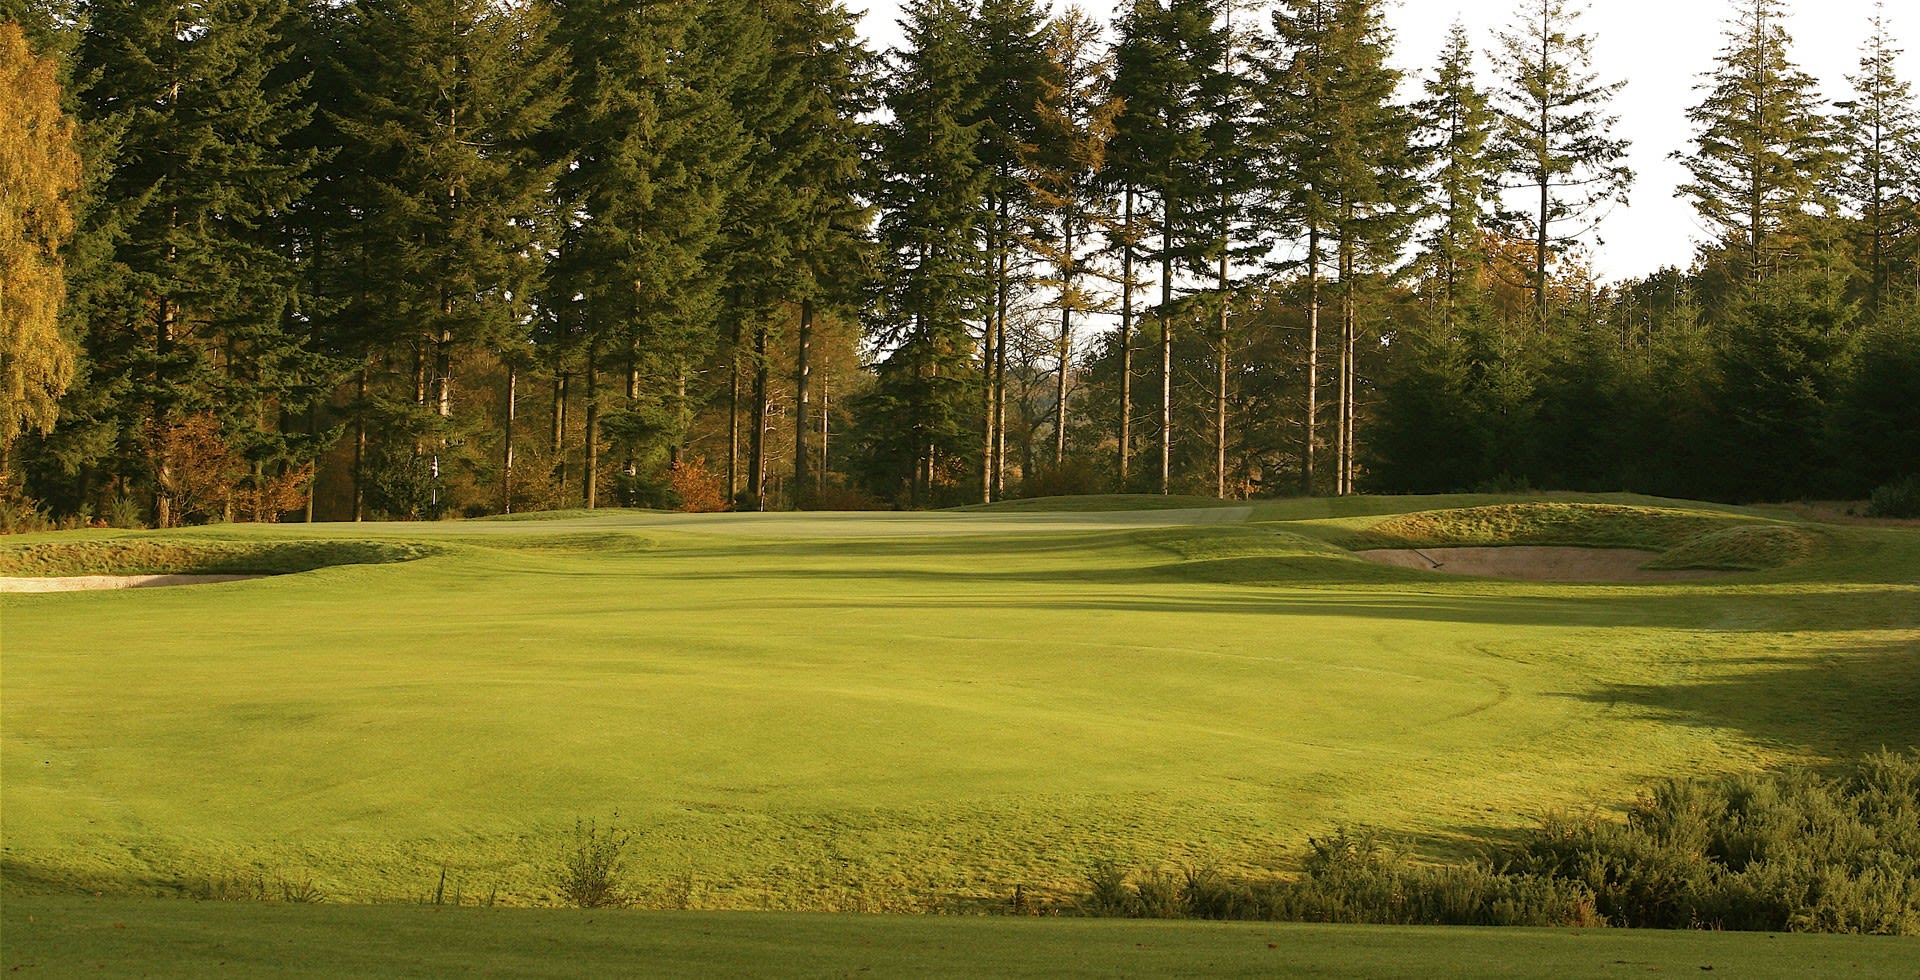 Remedy Oak Golf Course ©YourGolfTravel